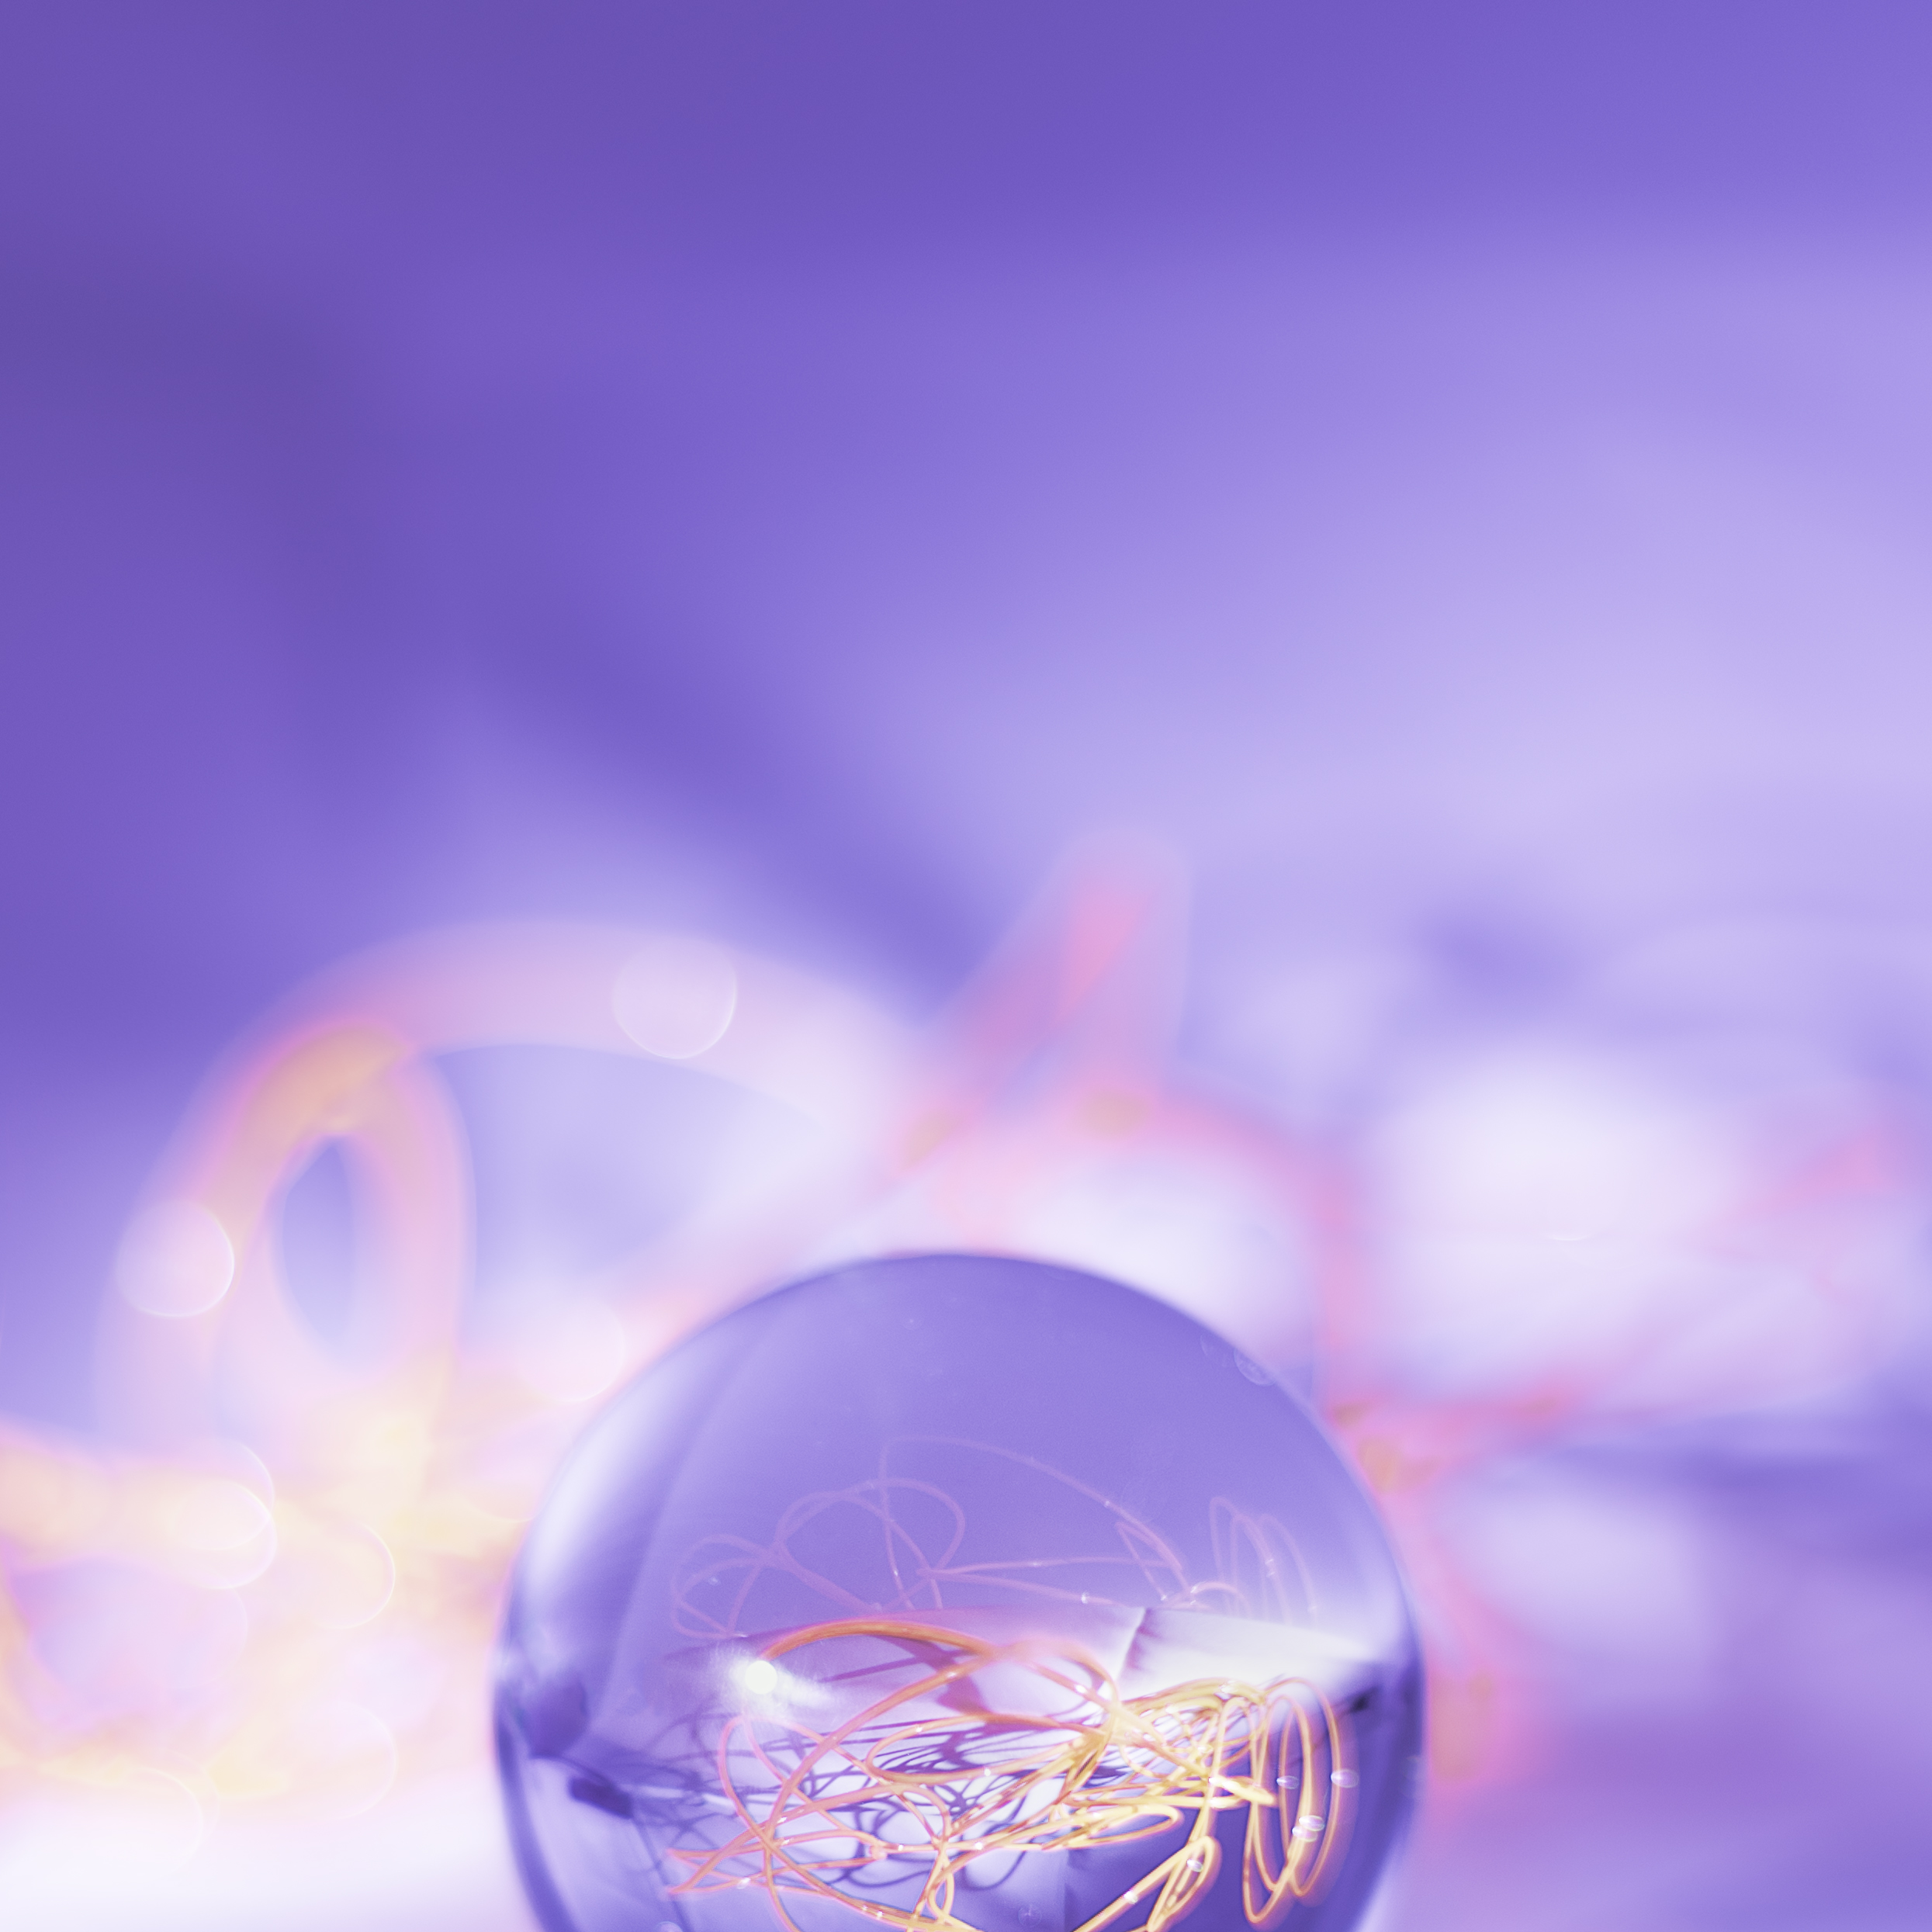 crystal, ball, purple, violet, reflection, macro iphone wallpaper